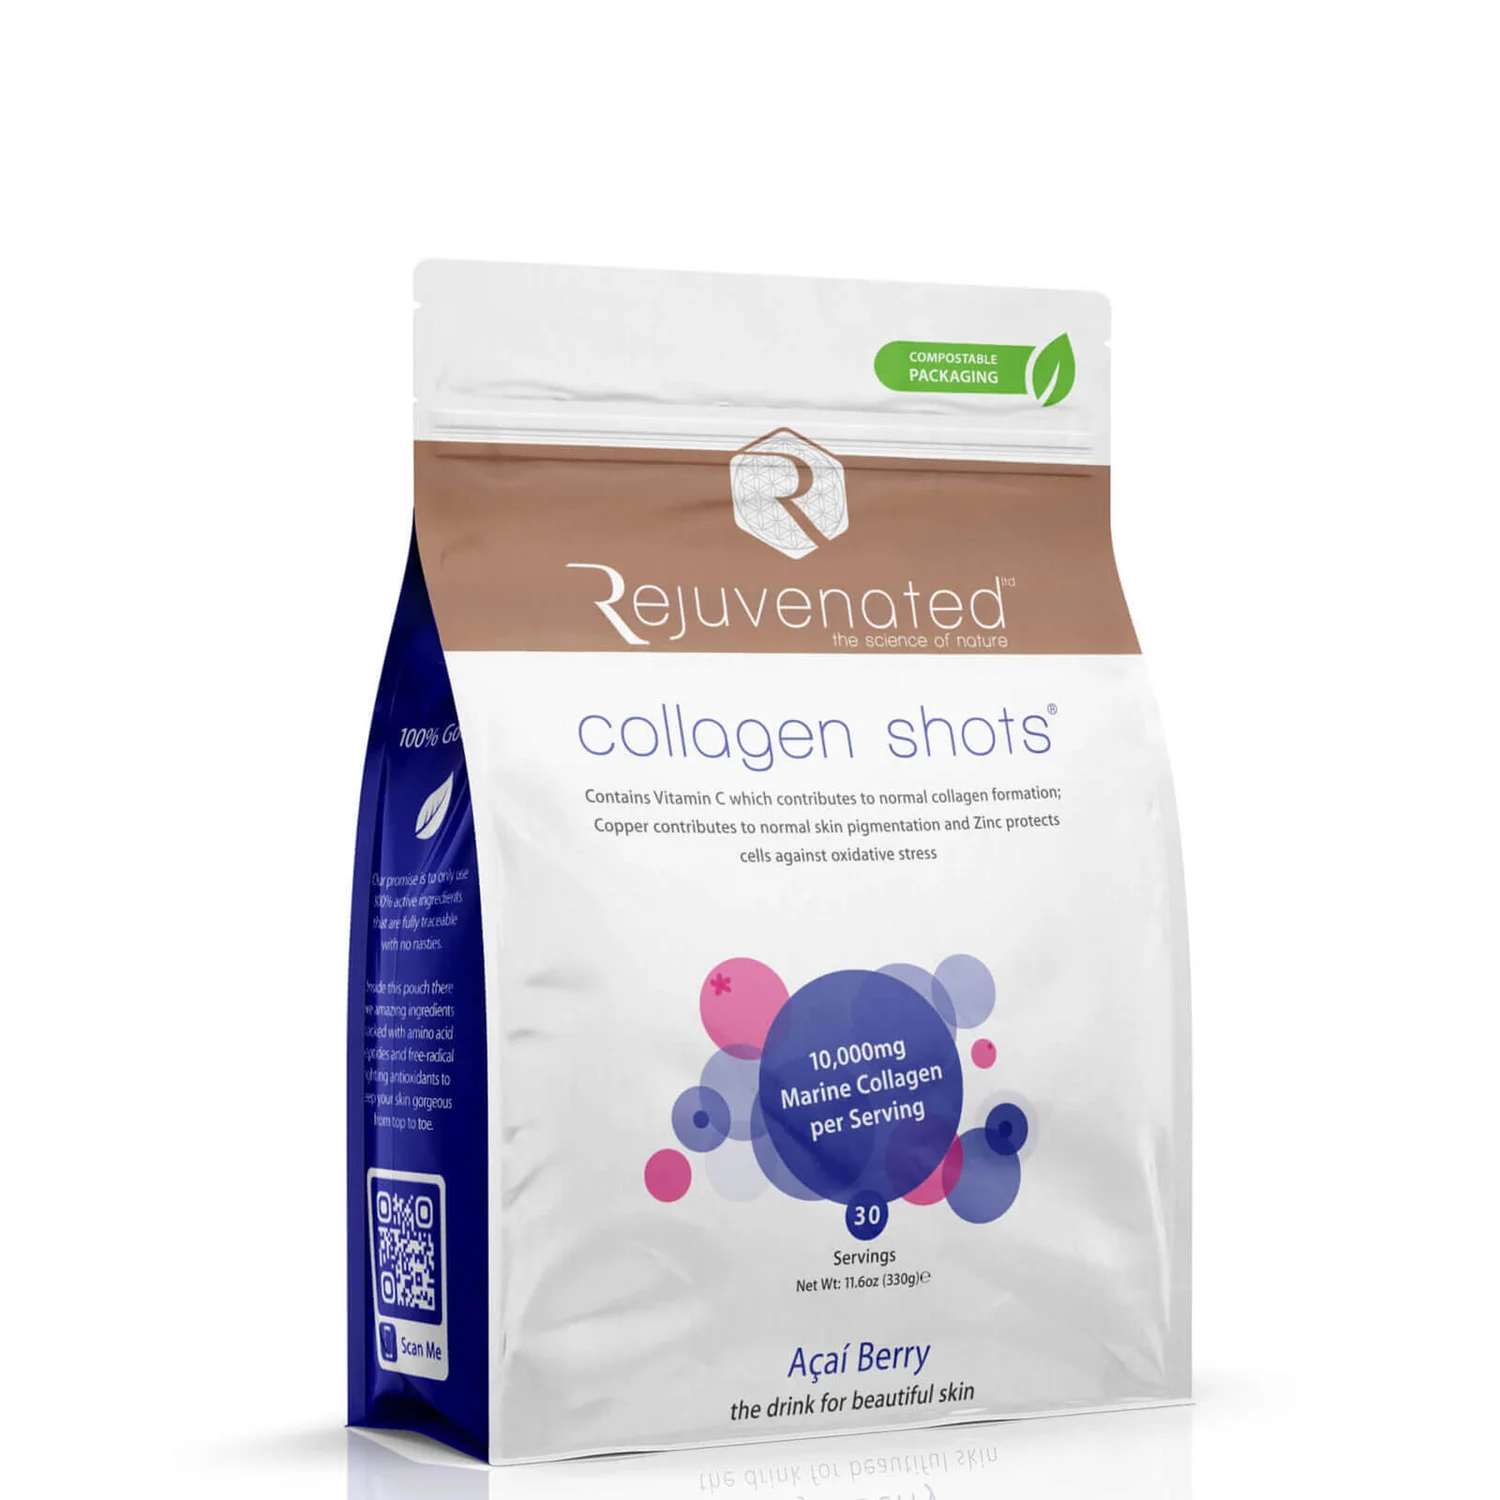 cultbeauty.co.uk | Rejuvenated Collagen Shots 30 Day Supply